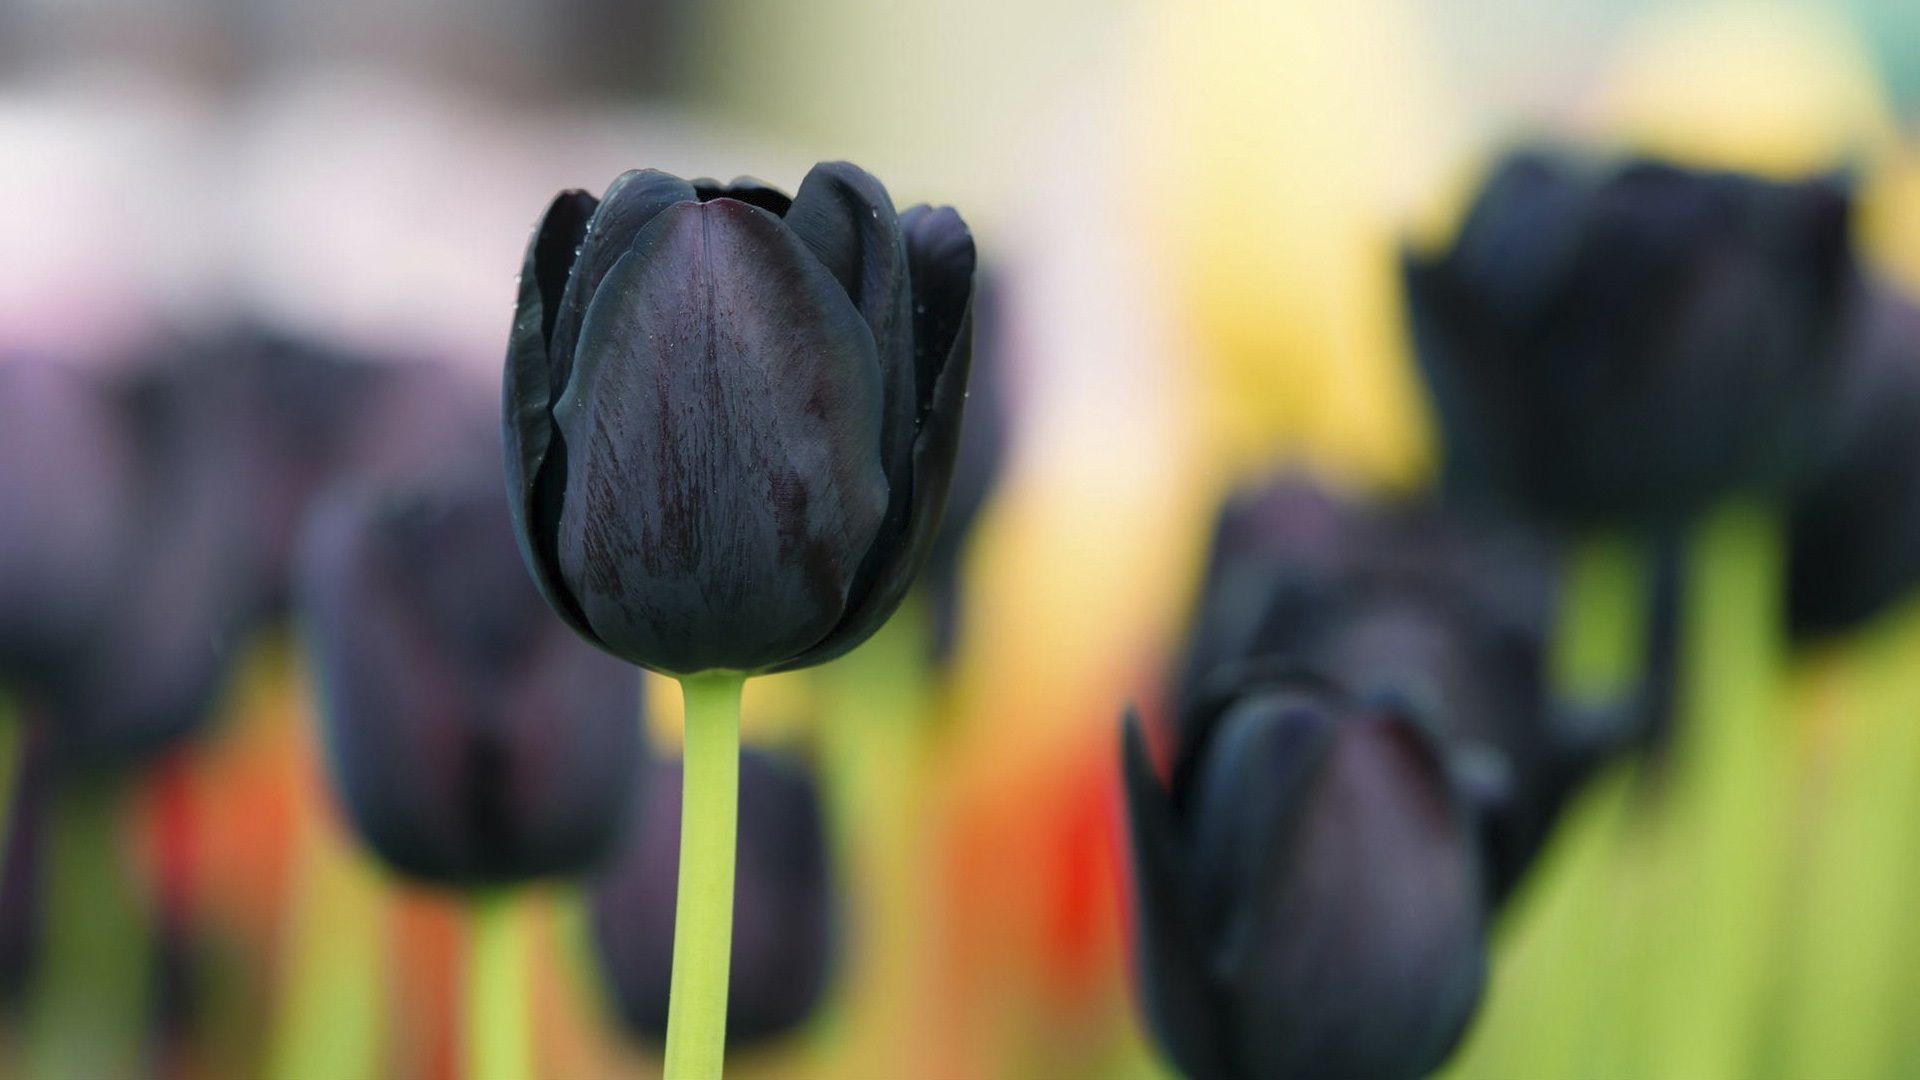 Black Tulip Flowers 640x960 IPhone 4 4S Wallpaper, Background